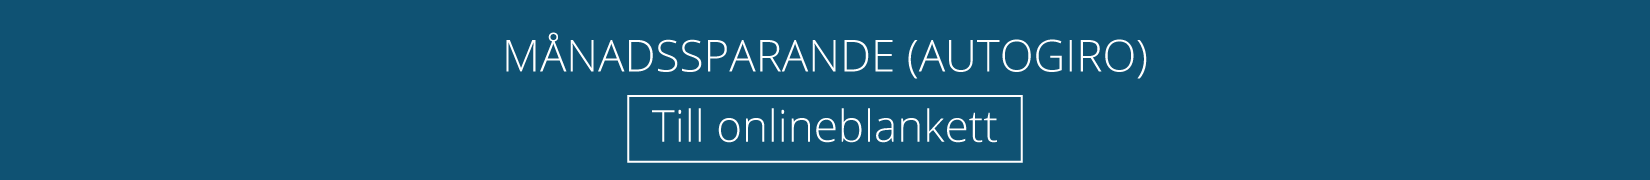 manadssparande_online